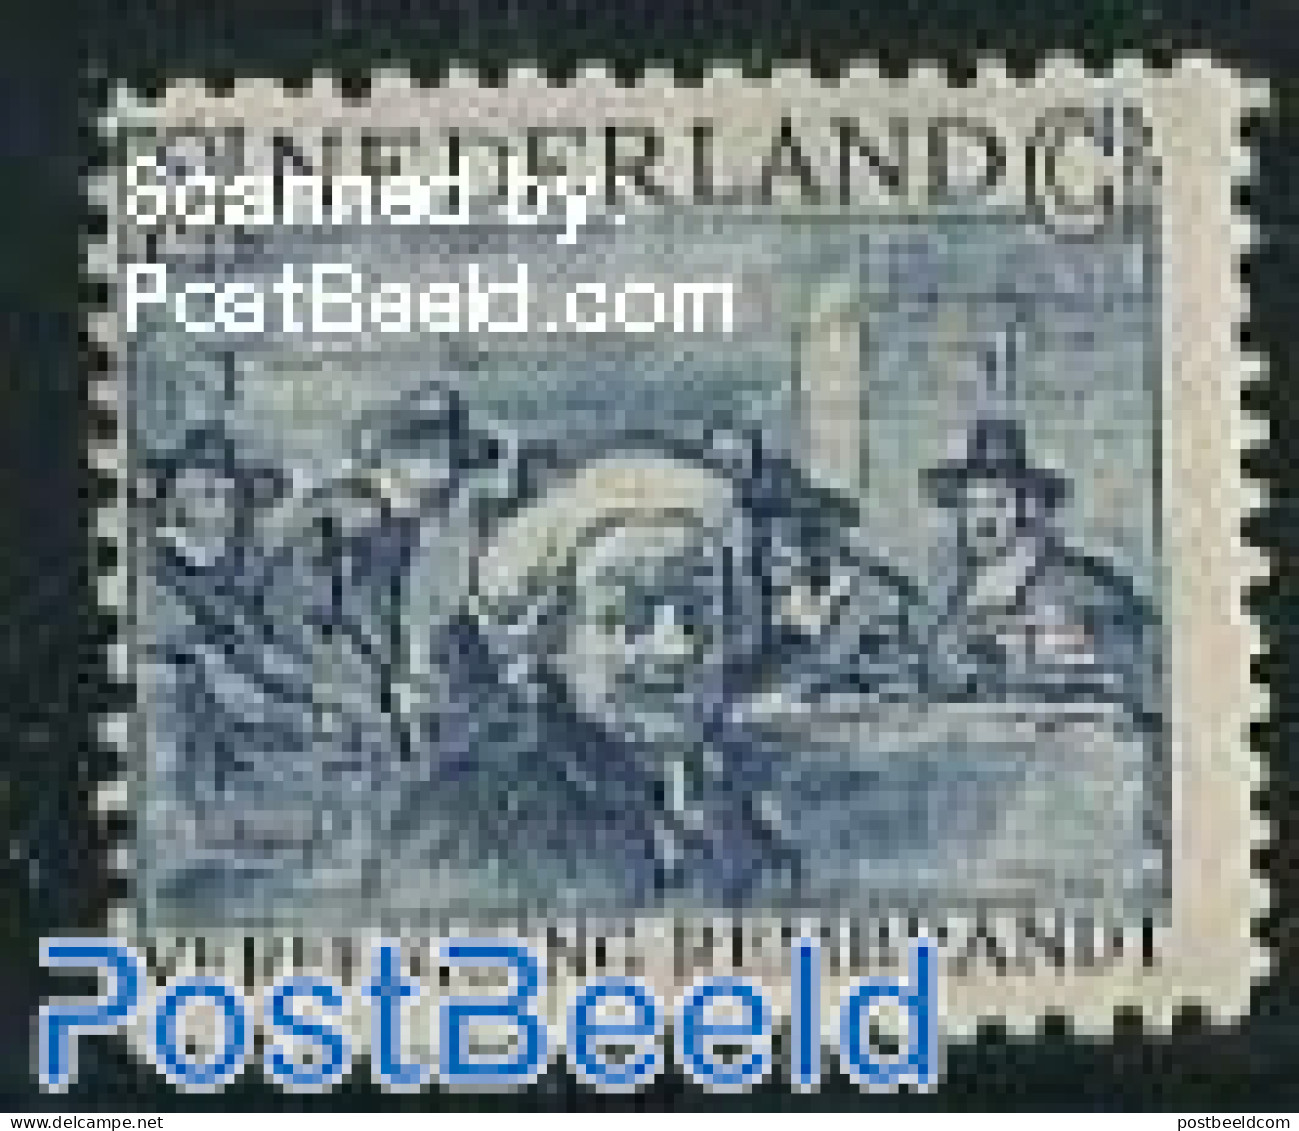 Netherlands 1930 12.5+5c, Rembrandt, Stamp Out Of Set, Mint NH, Art - Paintings - Rembrandt - Self Portraits - Ongebruikt